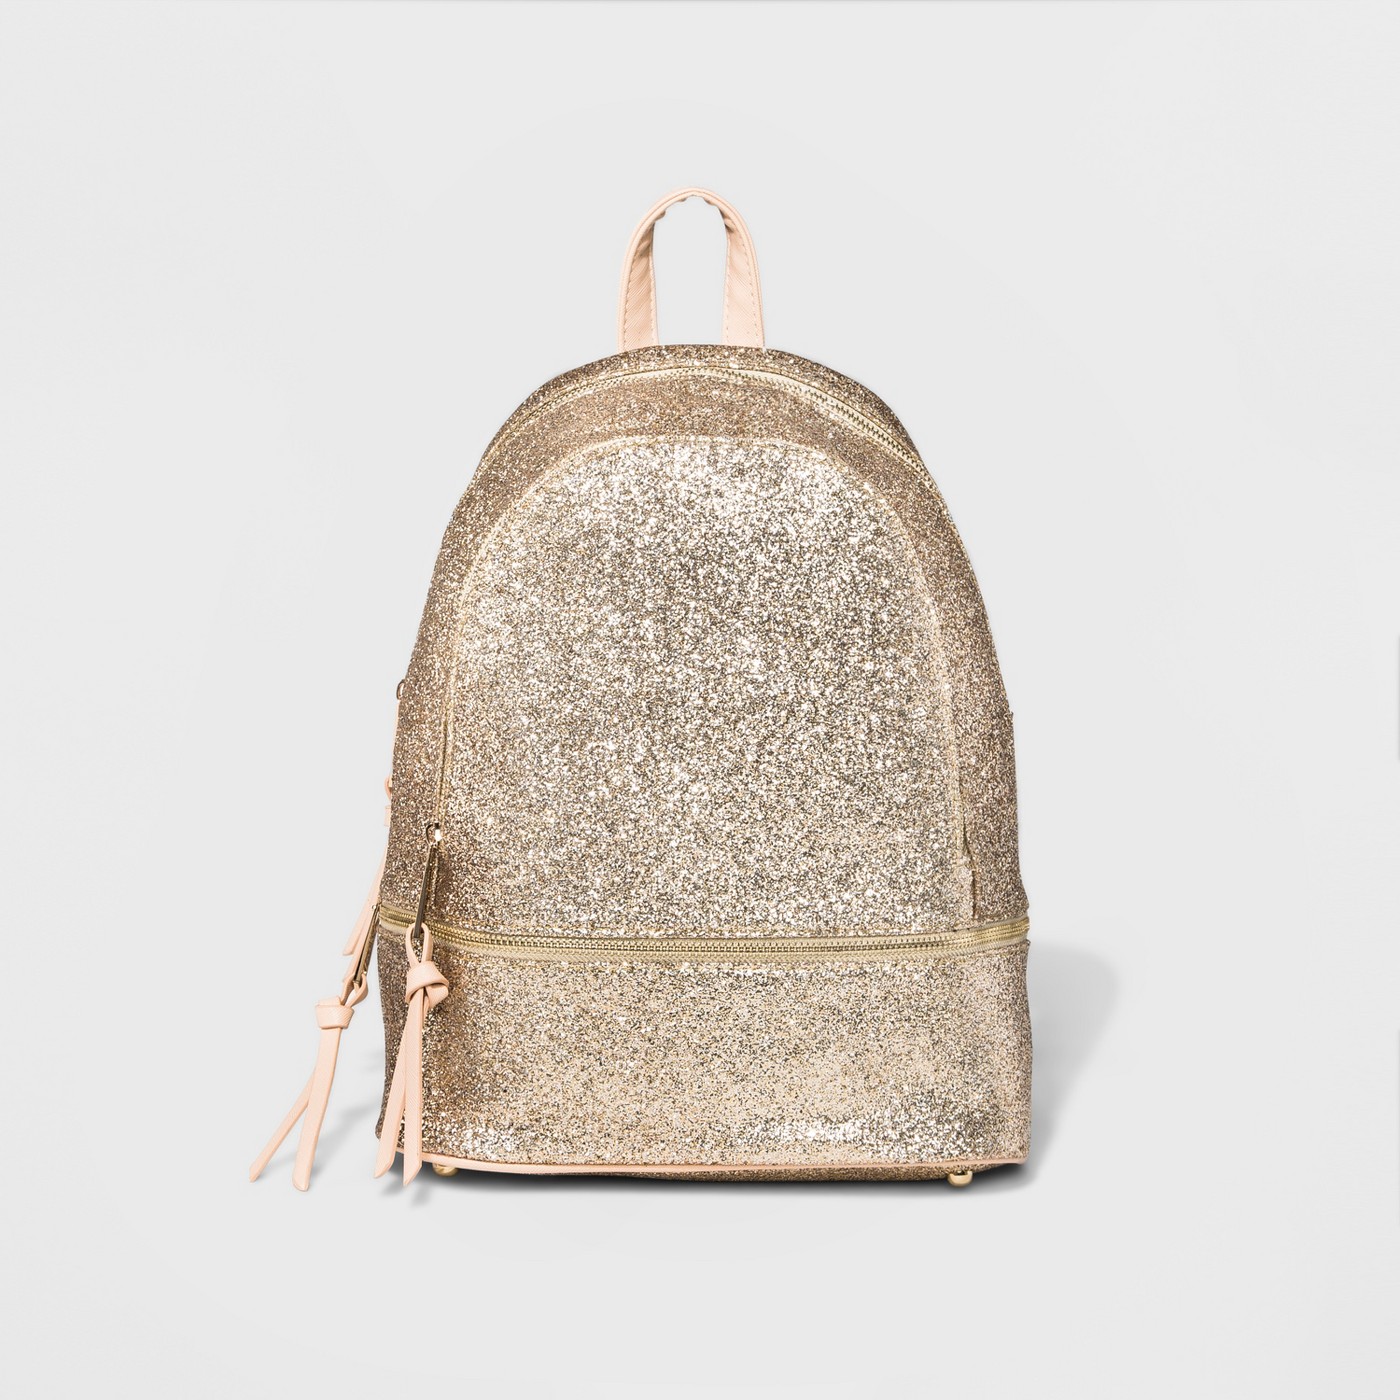 Under One Sky Glitter Mini Backpack - image 1 of 4